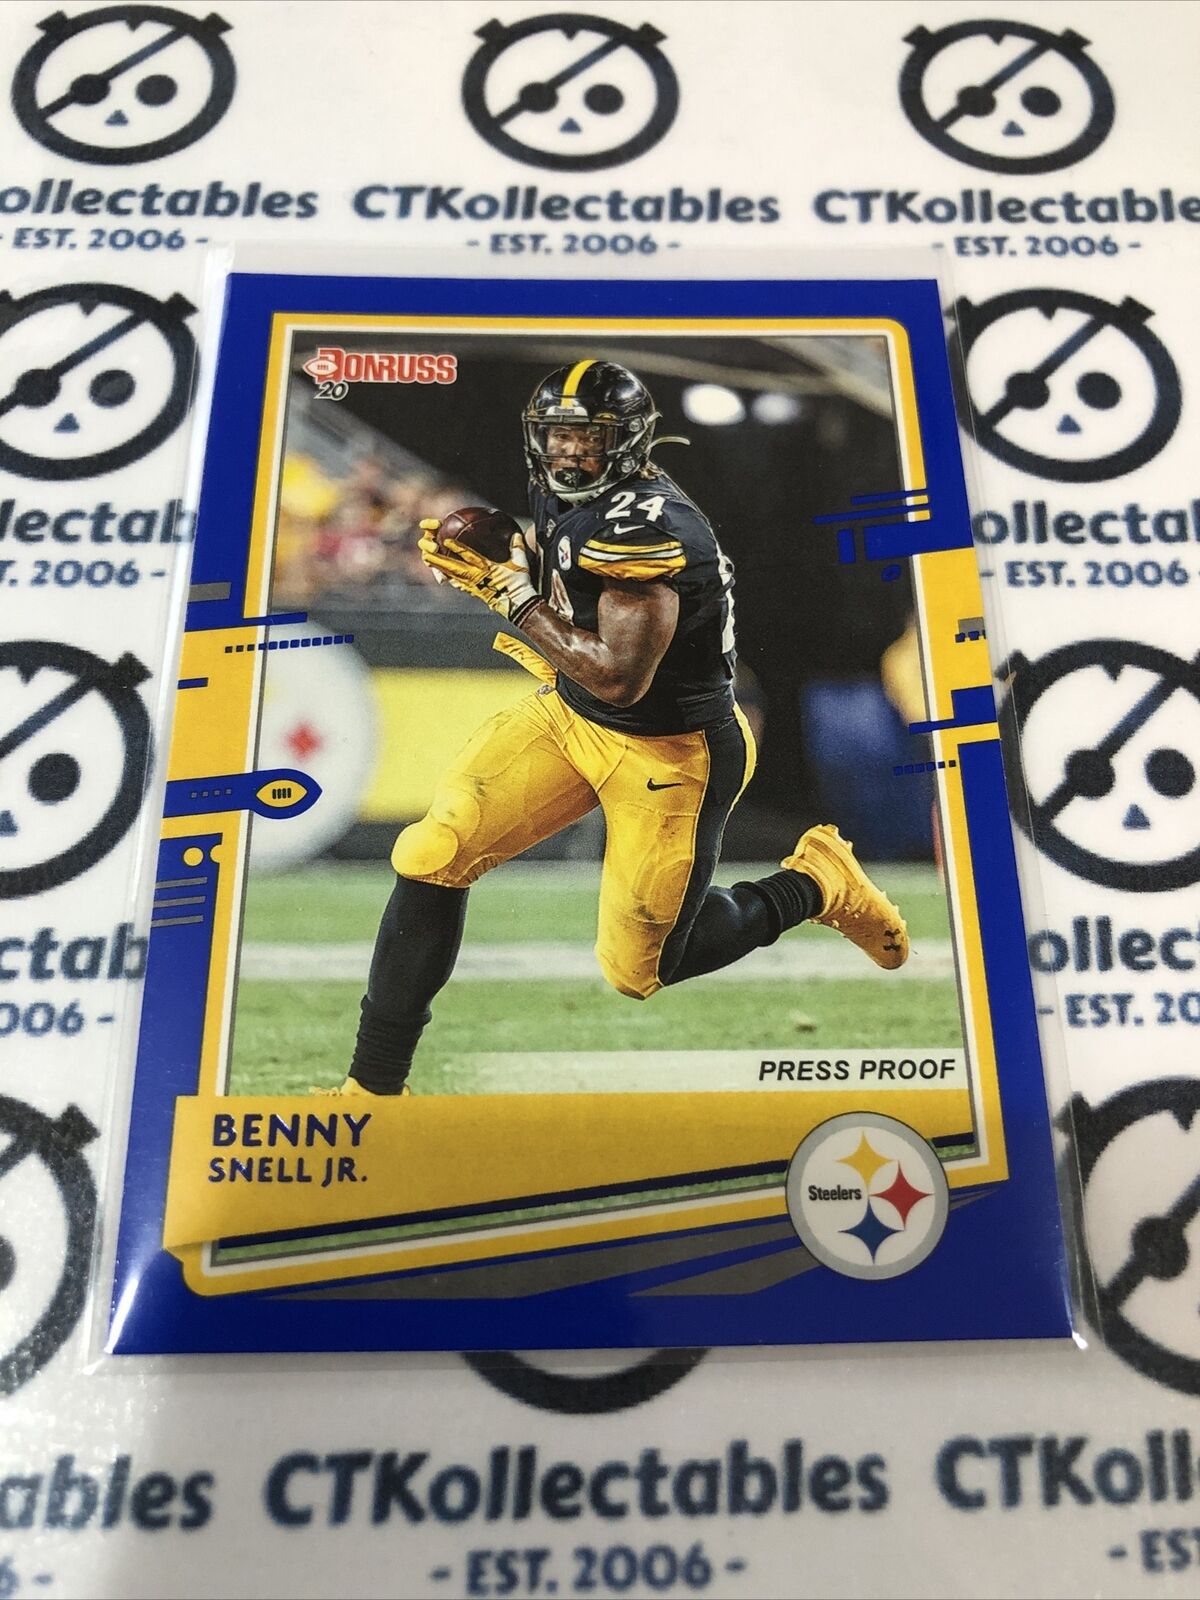 2020 NFL Donruss Blue Press Proof Benny Snell Jr. #217 Steelers